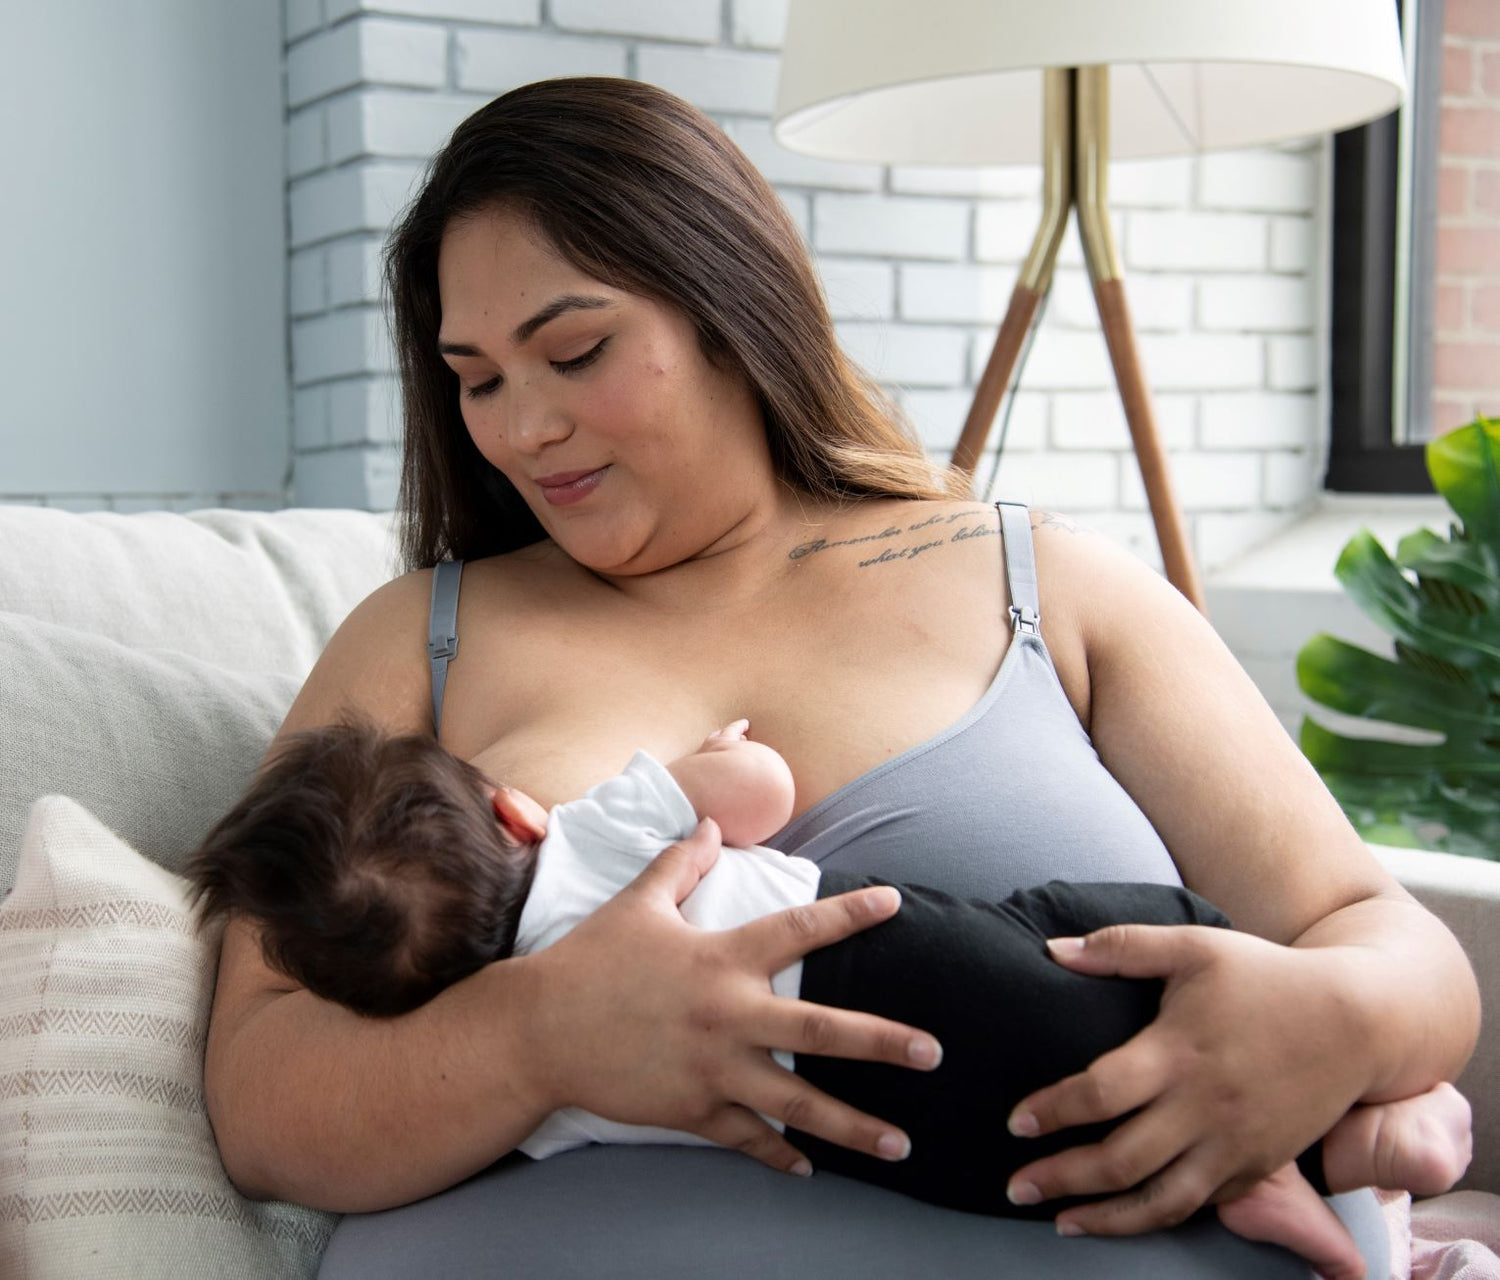 Maternity Nursing Tank Top Cami - Black - Medium by Motherhood